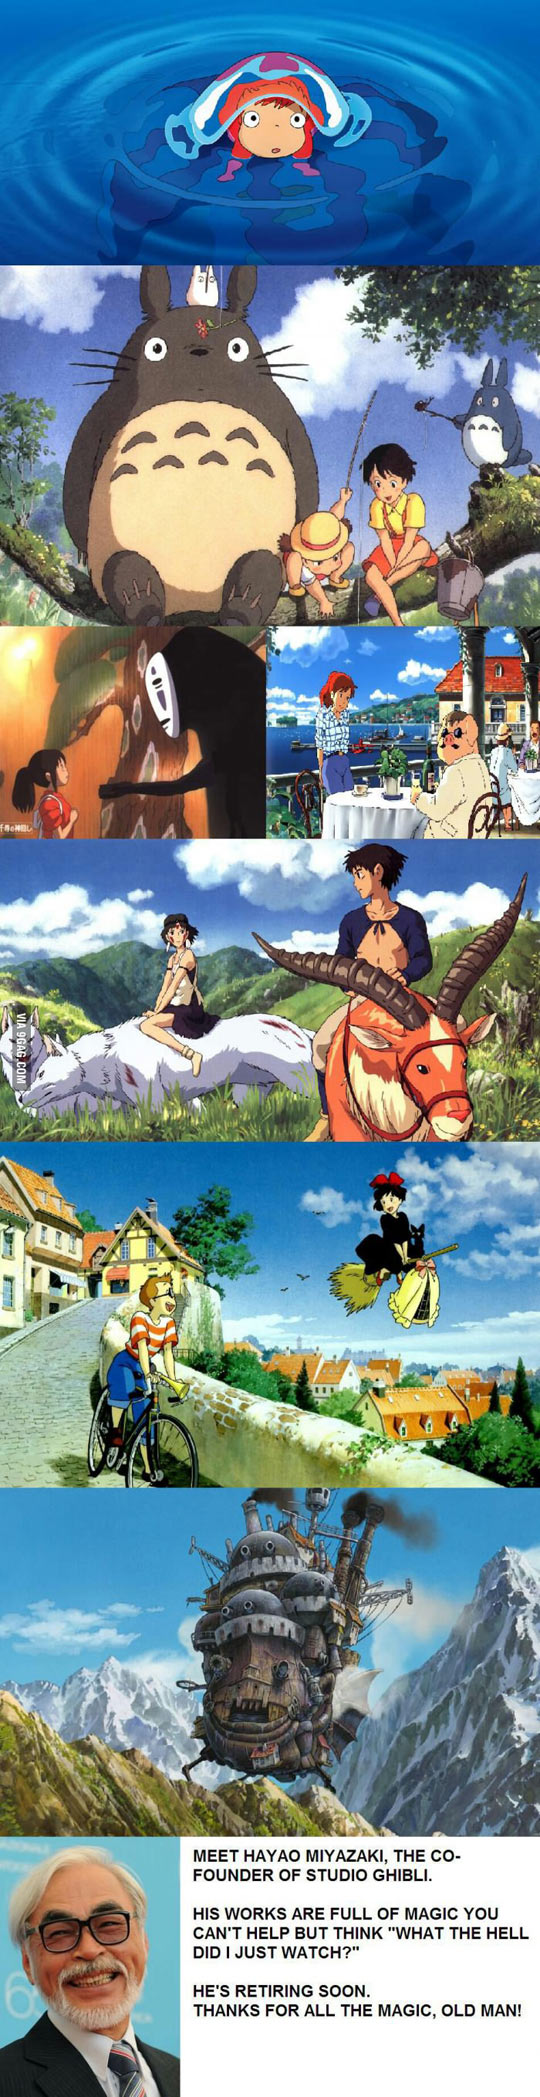 cool-Hayao-Miyazaki-Princess-Mononoke-magic